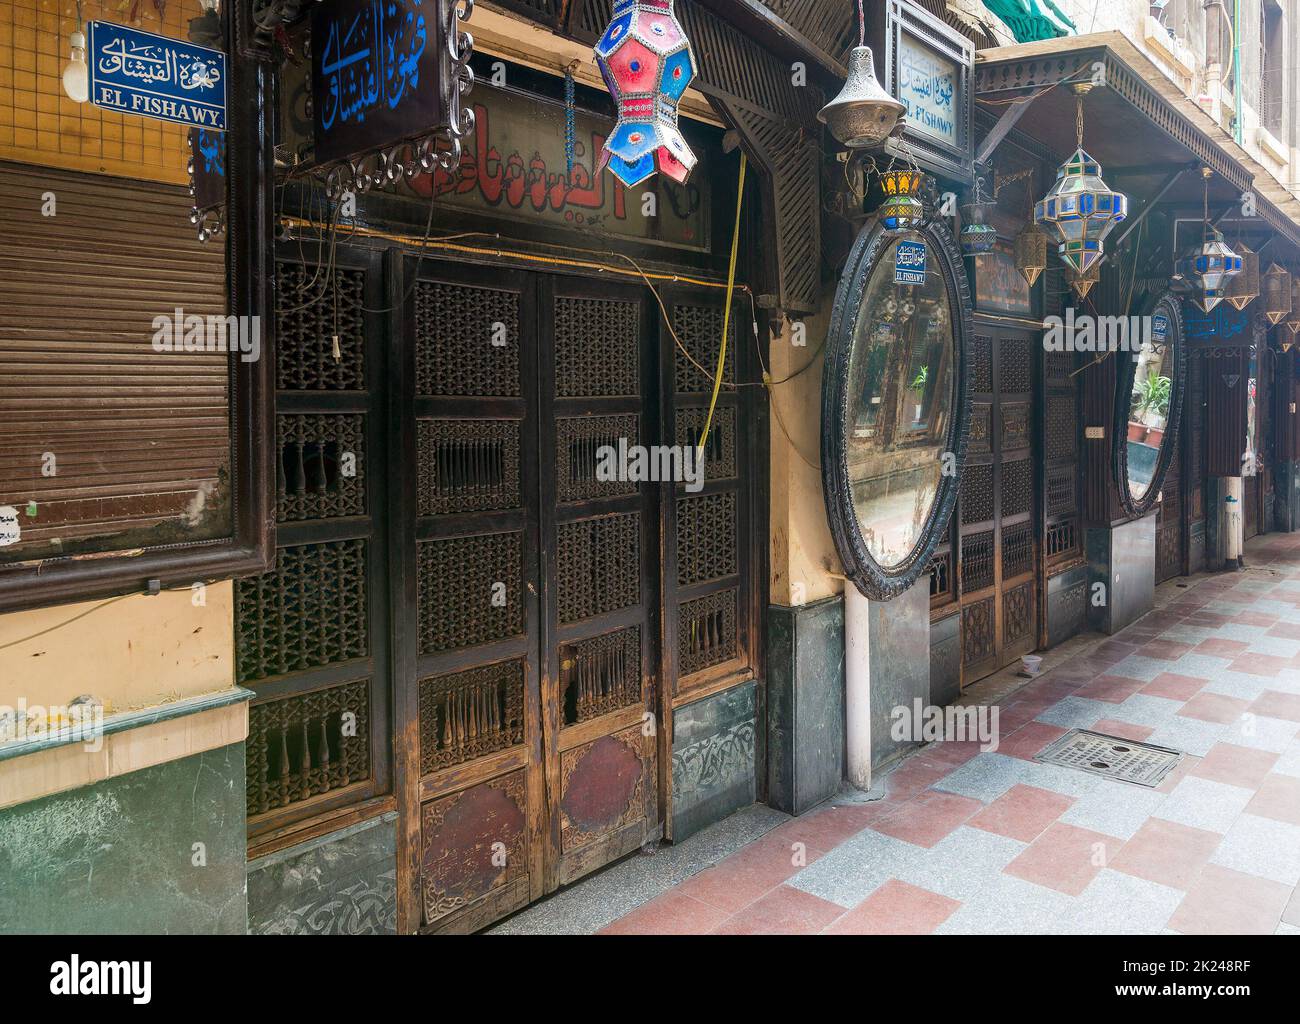 Cairo, Egypt- June 26 2020: Old famous coffeehouse, El Fishawi, located in historic Mamluk era Khan al-Khalili famous bazaar and souq, closed during C Stock Photo